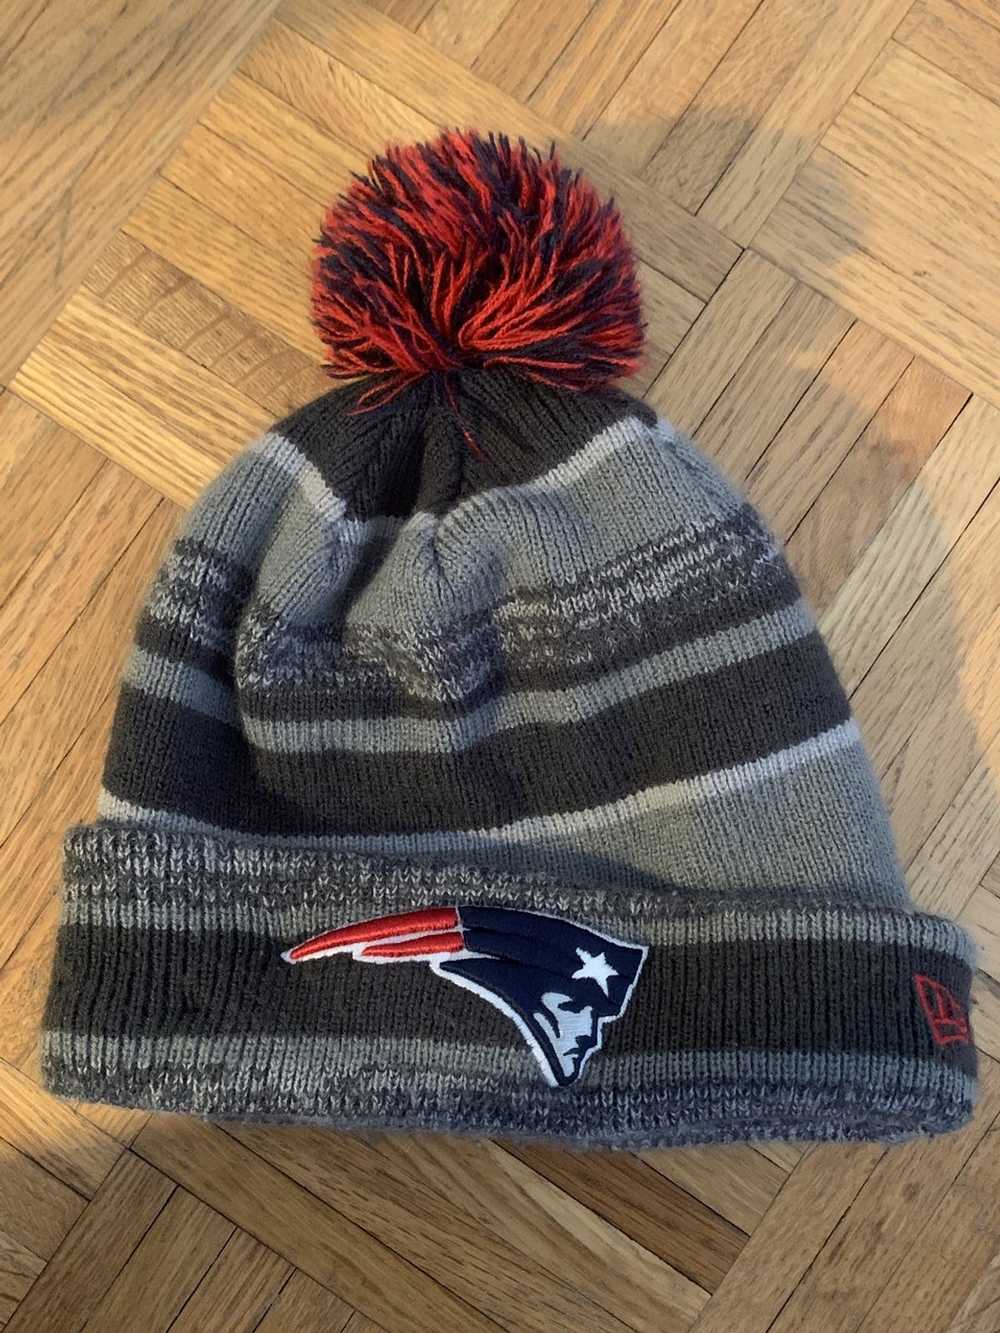 New Era New England Patriots winter hat with Pom … - image 1